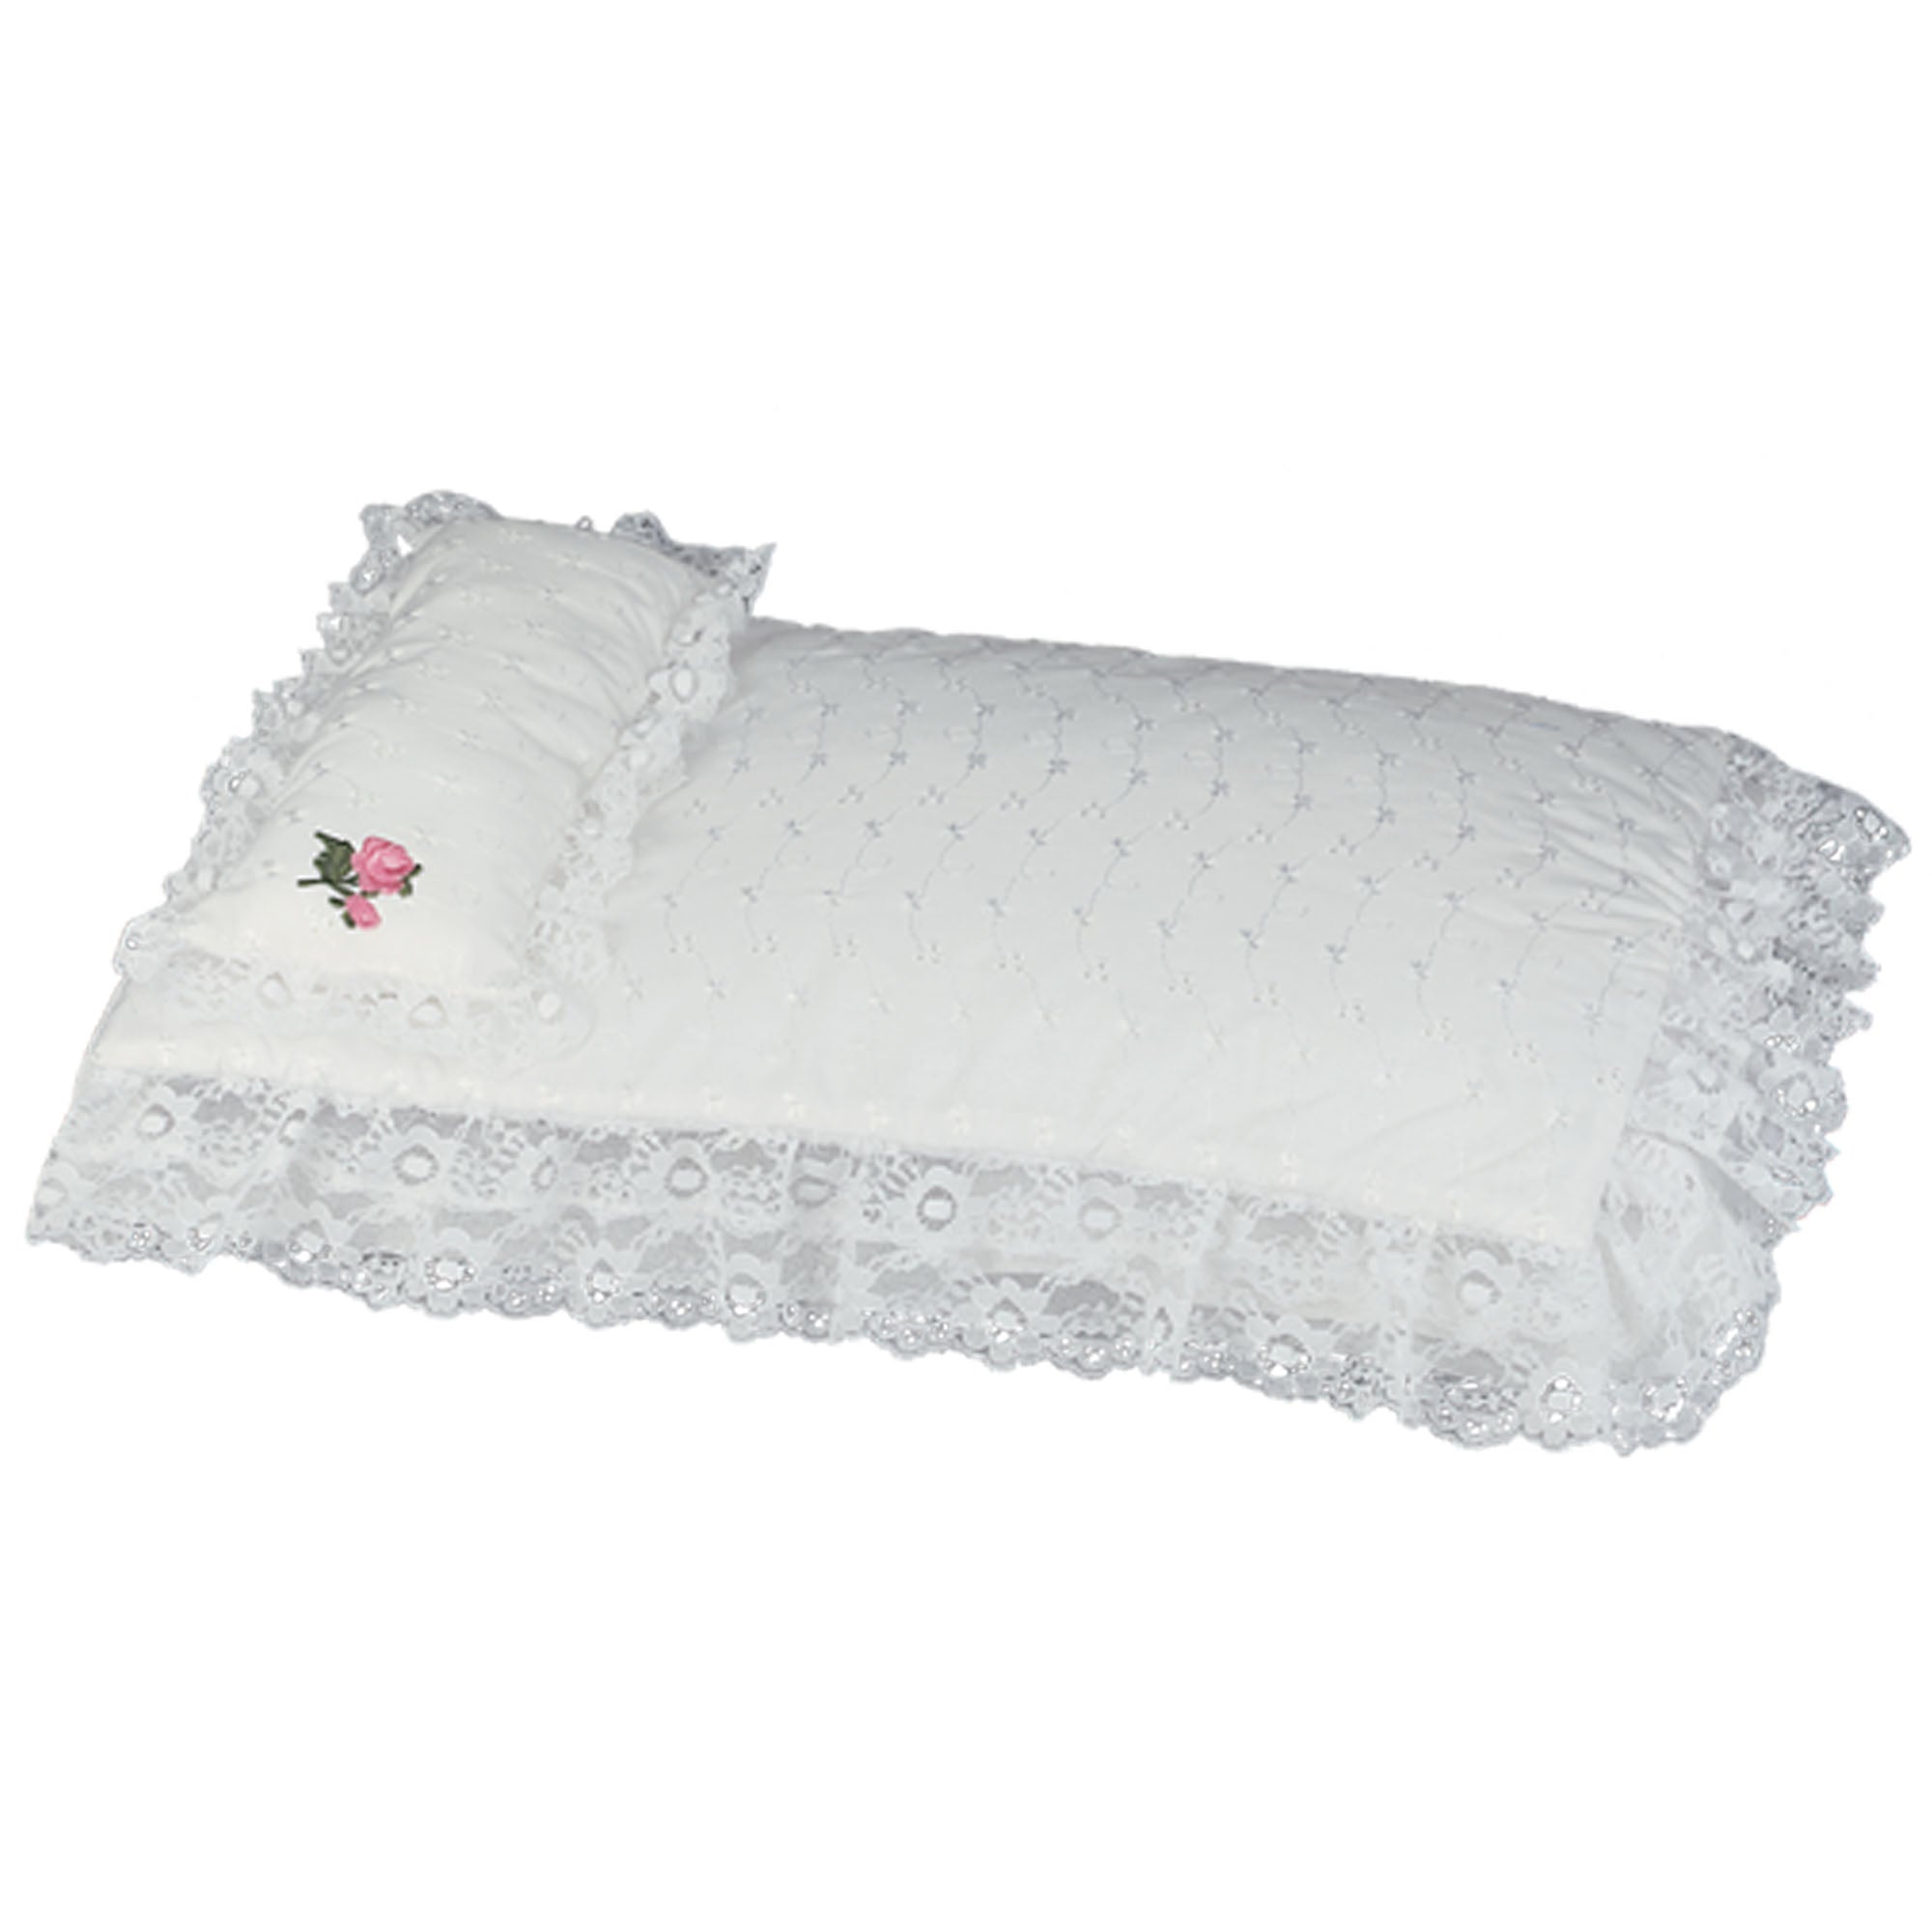 Sophia's 2 Piece Eyelet Bedding and Pillow Set for 18" Dolls, White